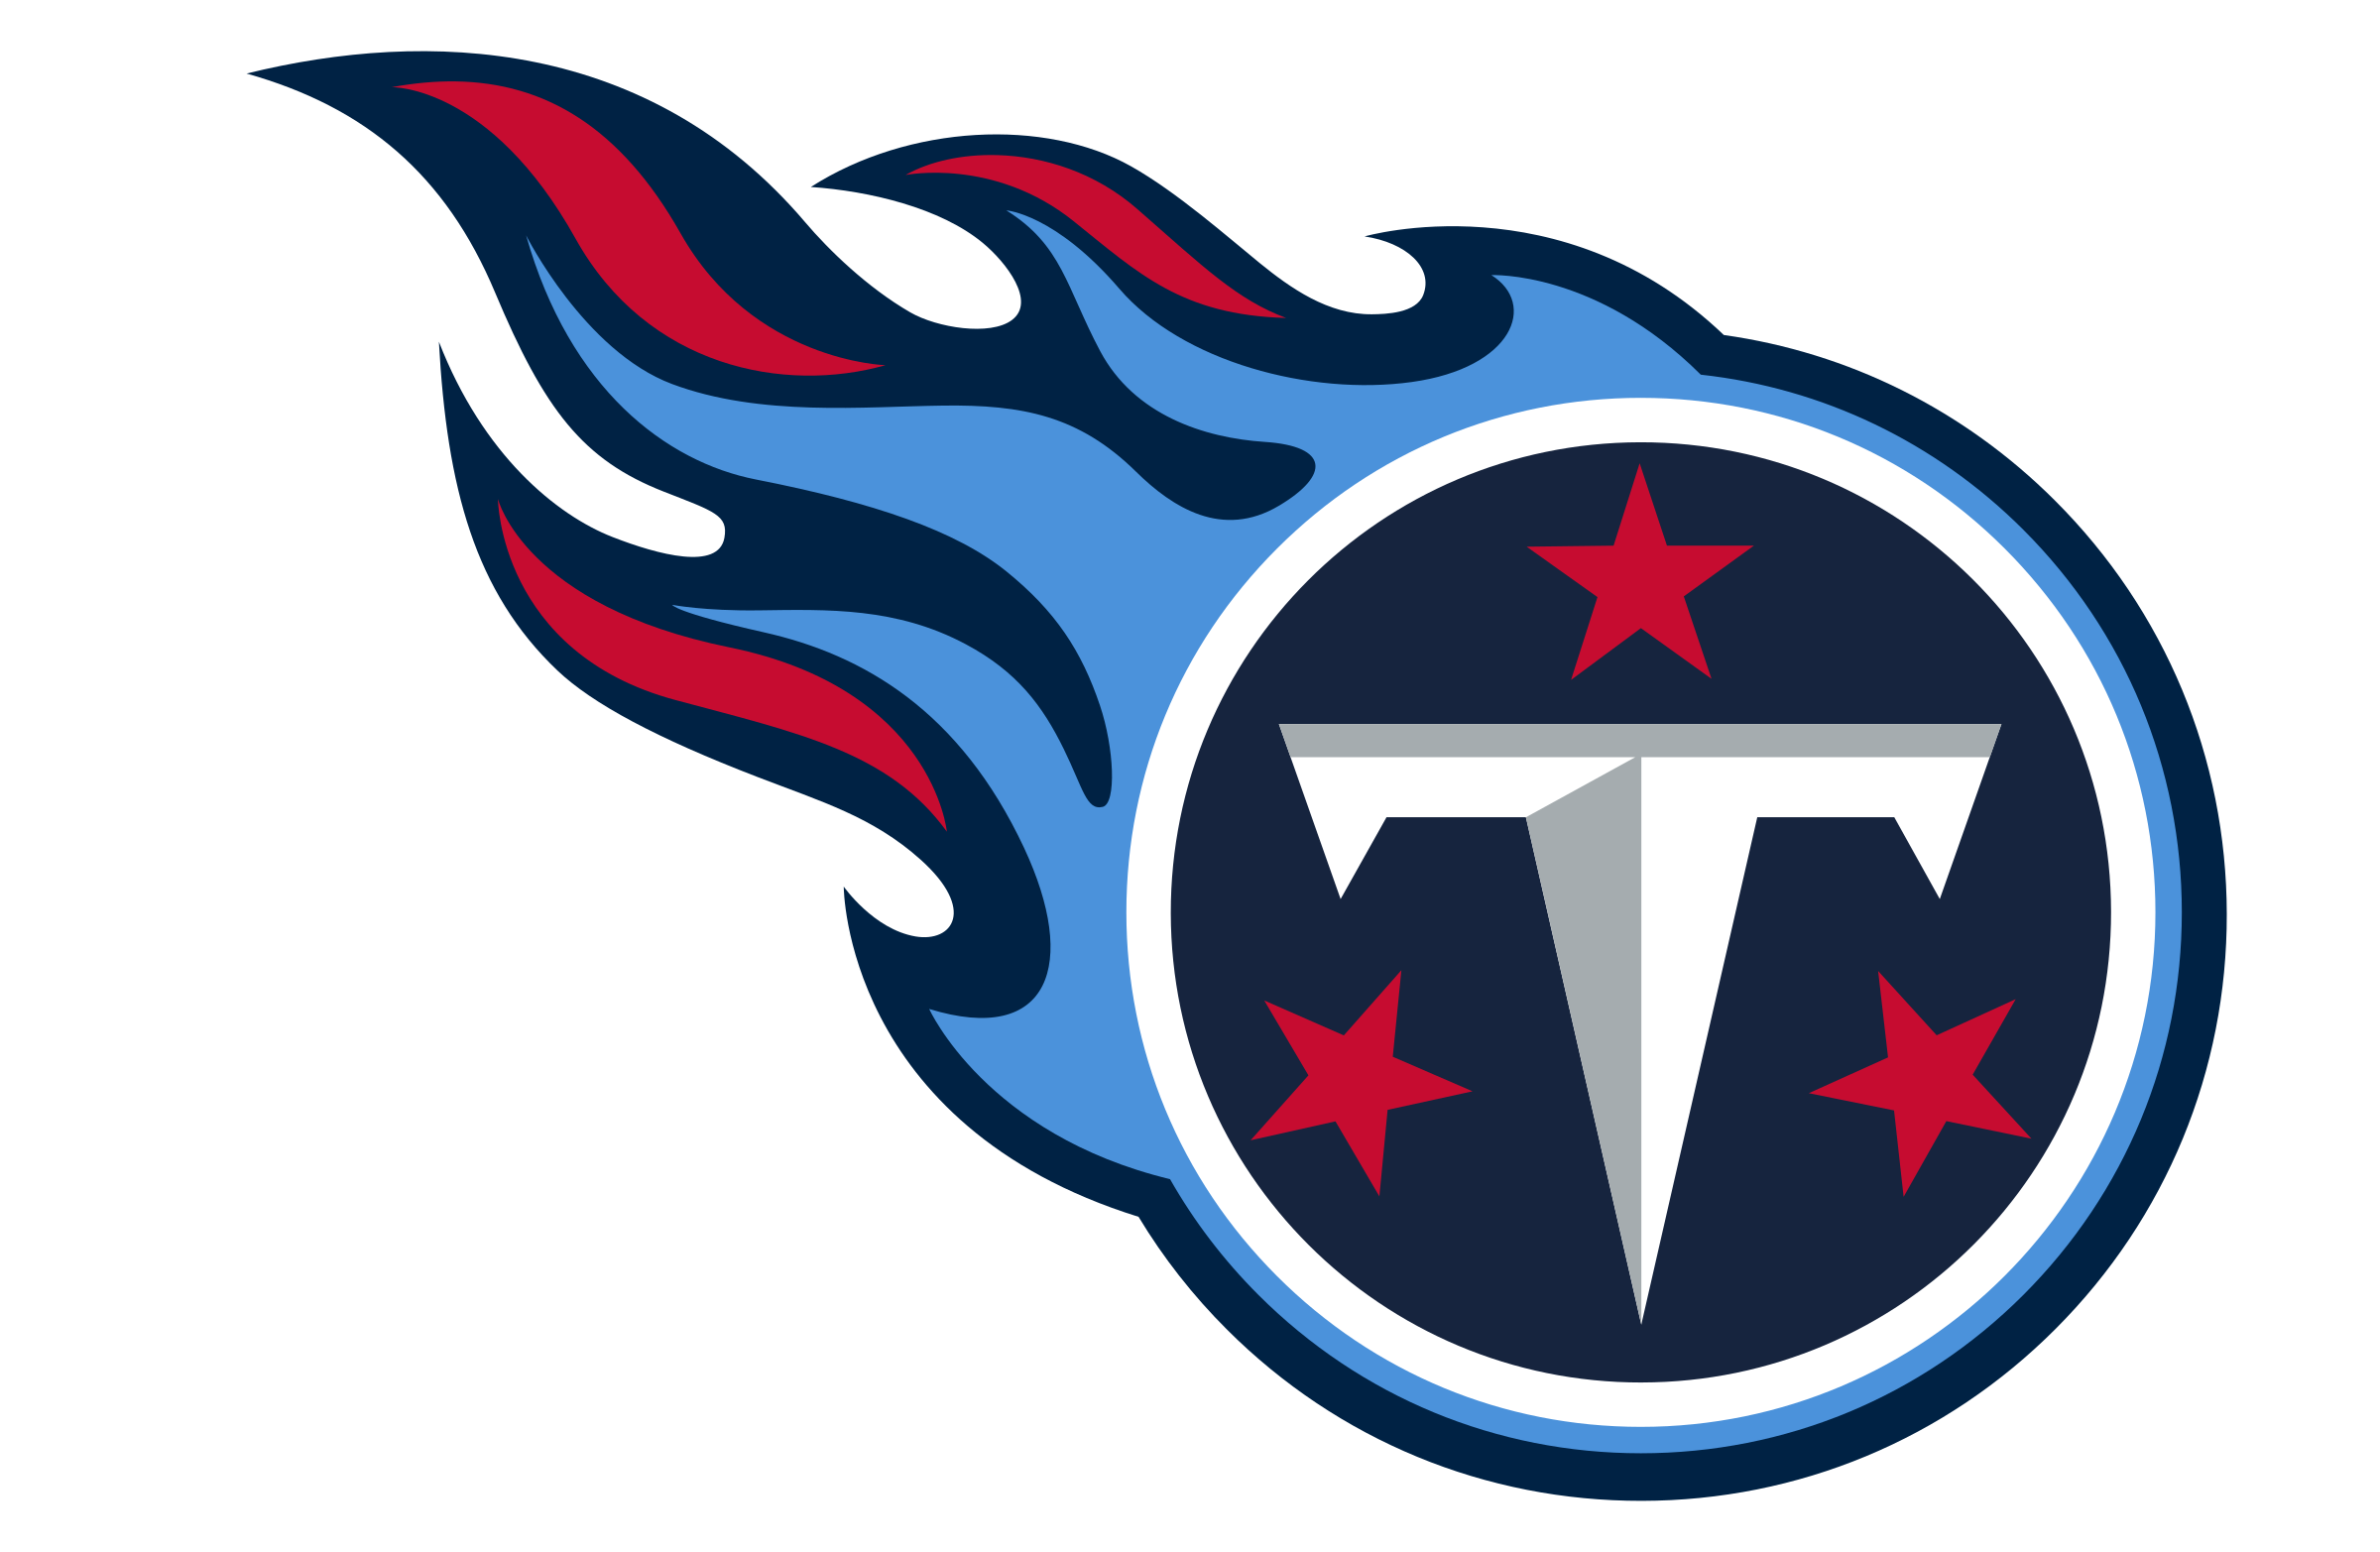 Tennessee Titans football log